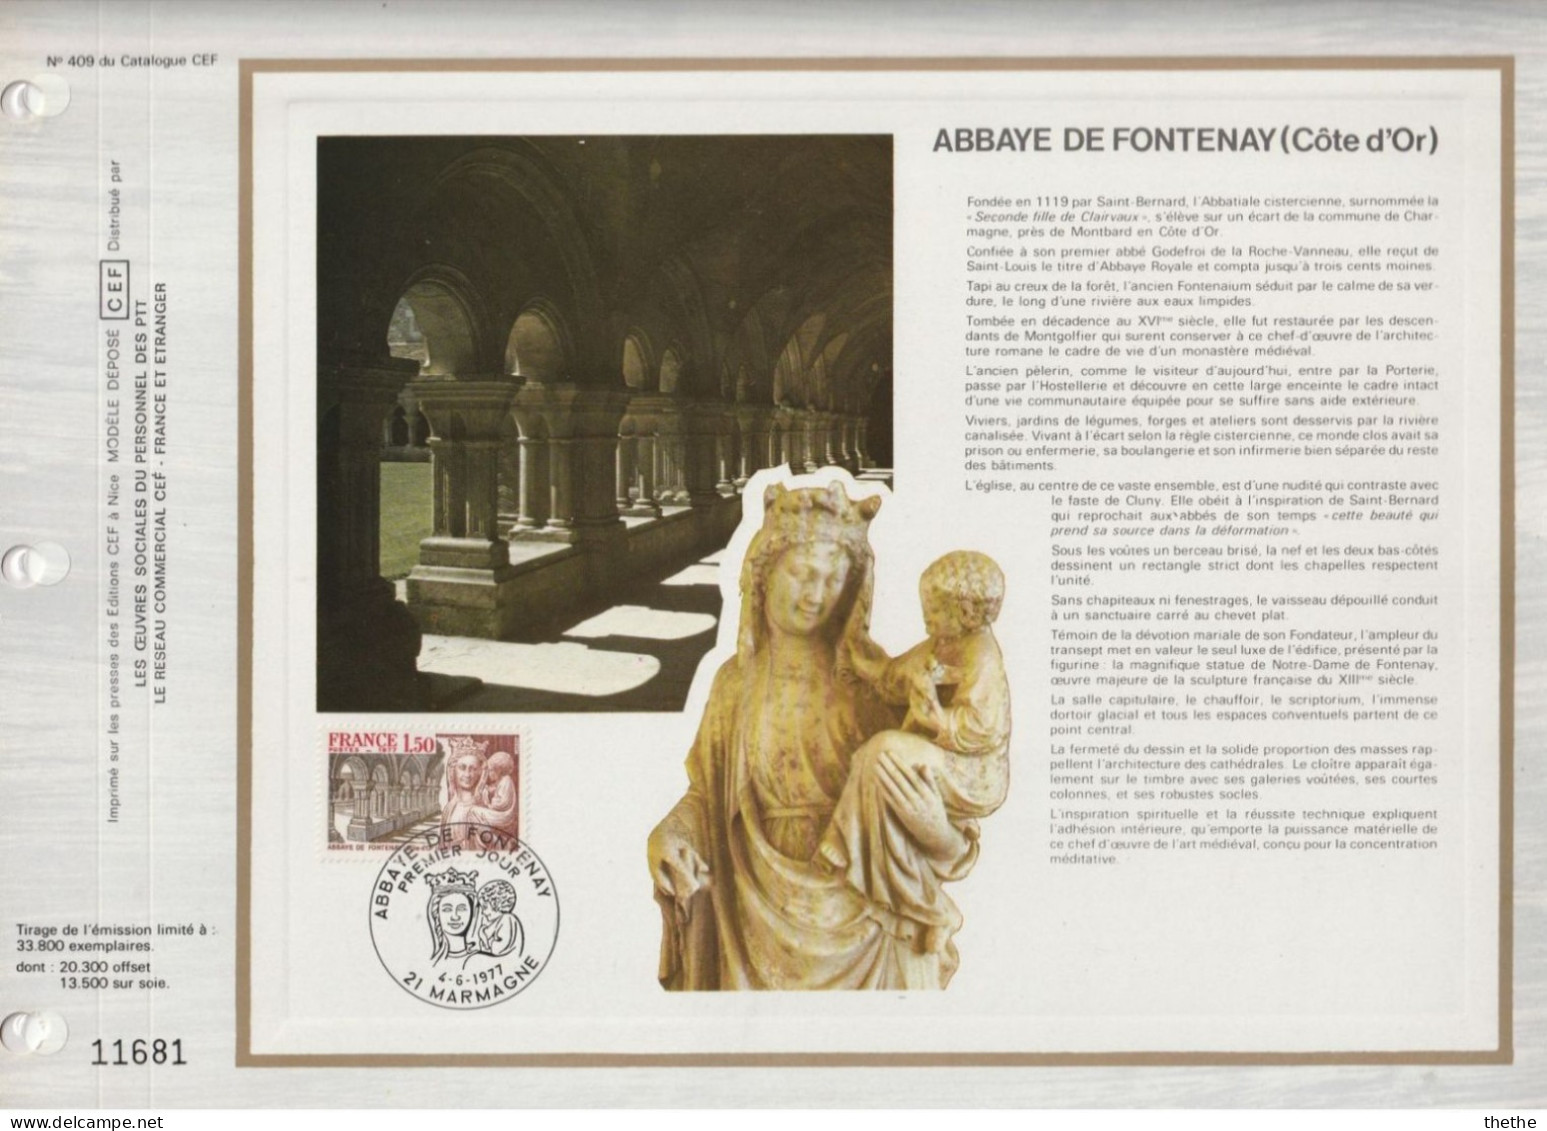 FRANCE - Abbaye De Fontenay (Côte D'Or) - N° 409 Du Catalogue CEF - 1970-1979